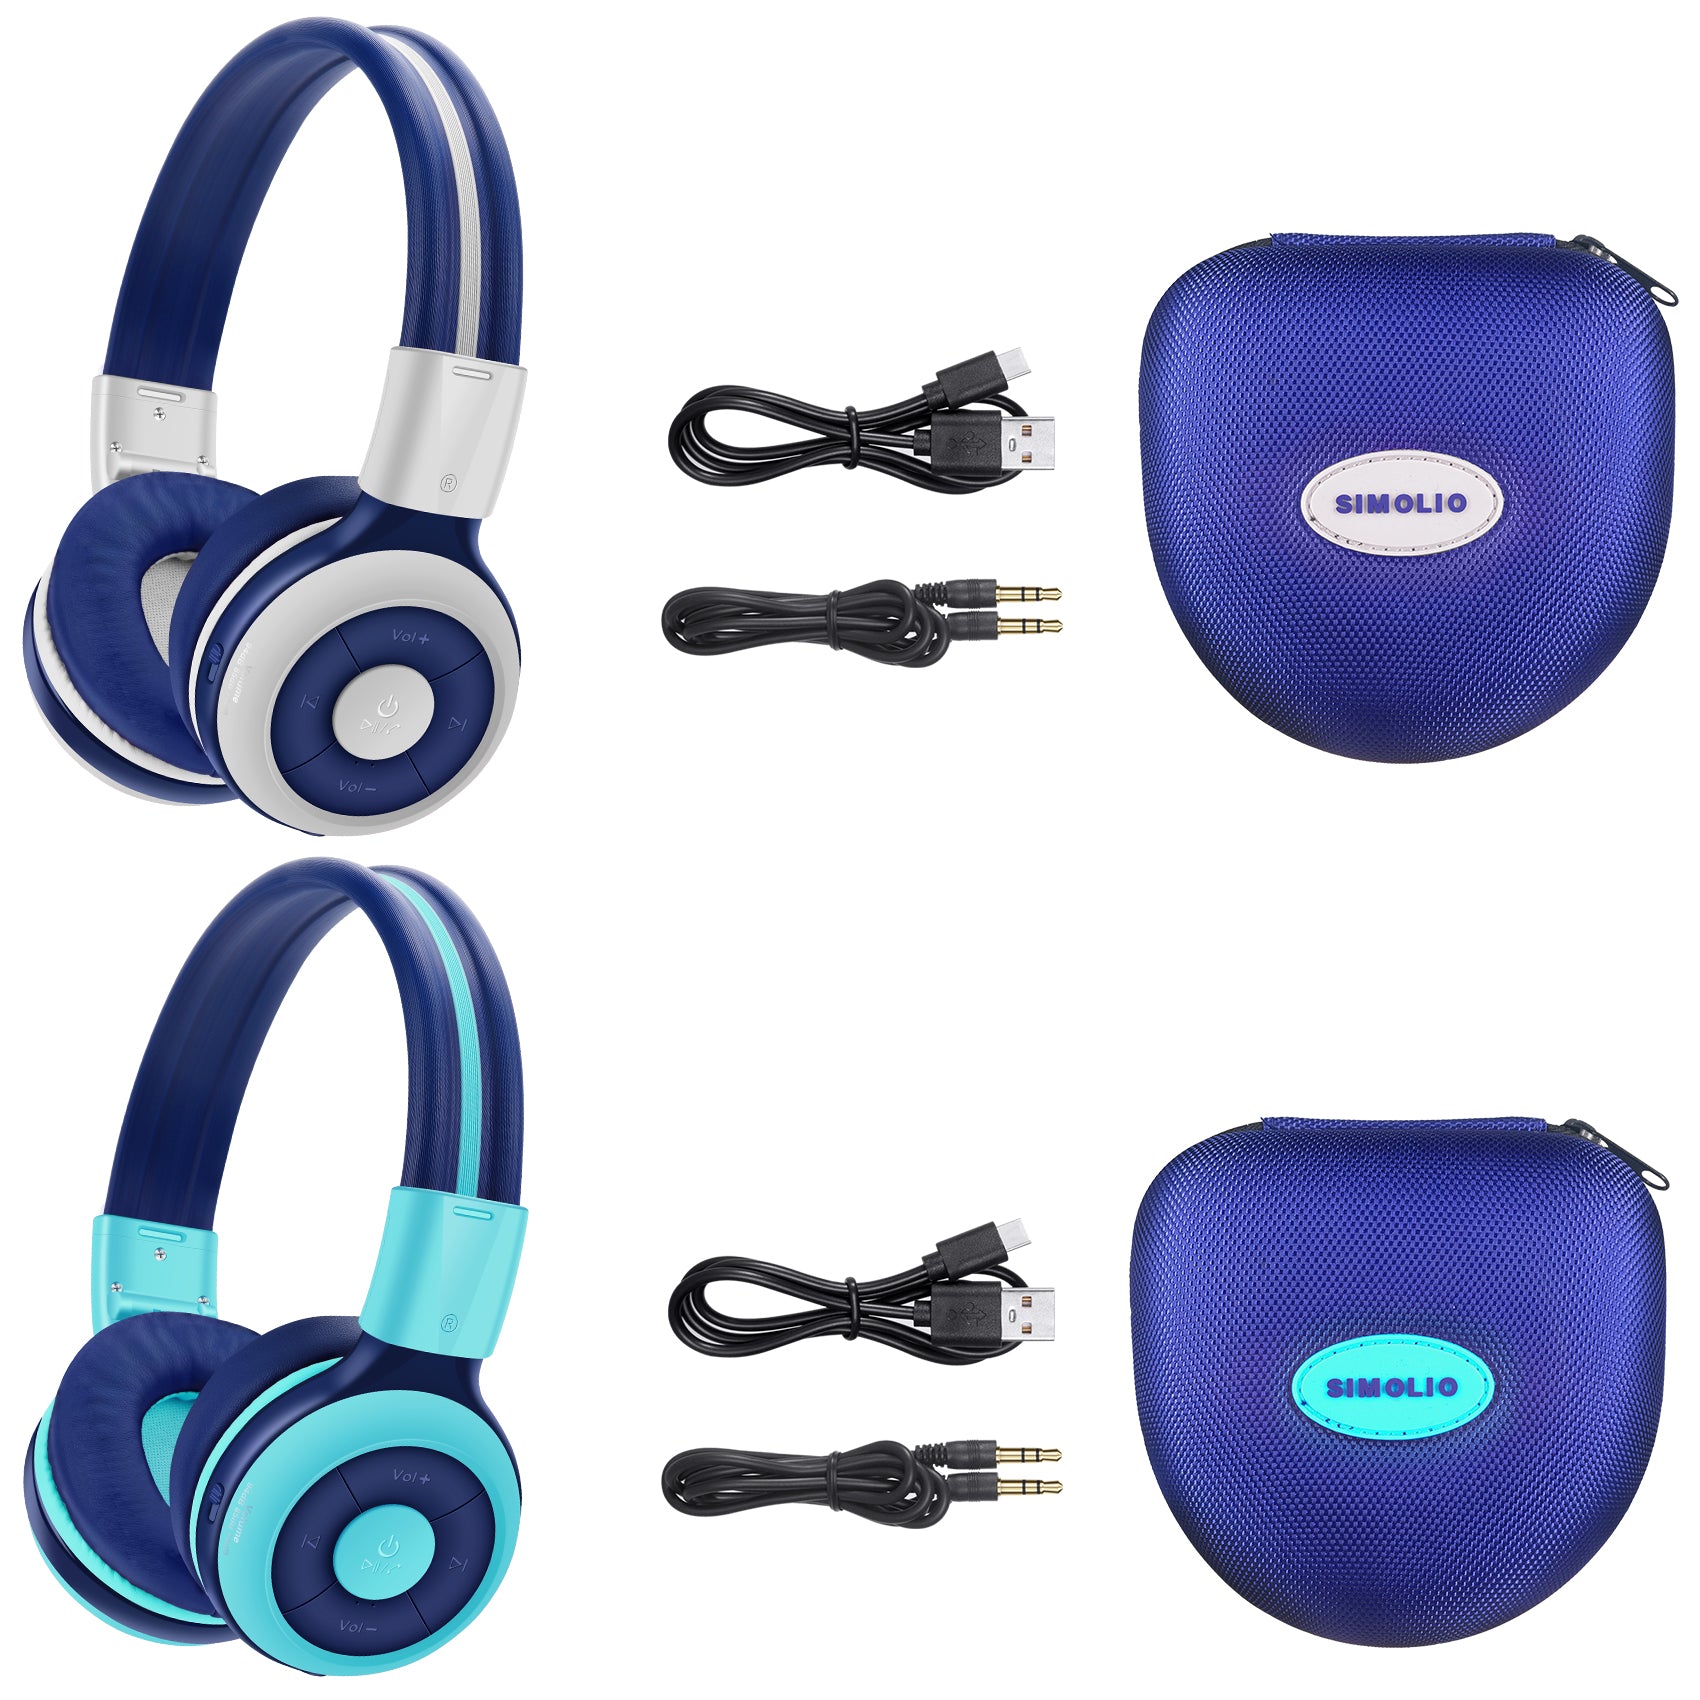 SIMOLIO Bluetooth Kids Headphones JH-712MG